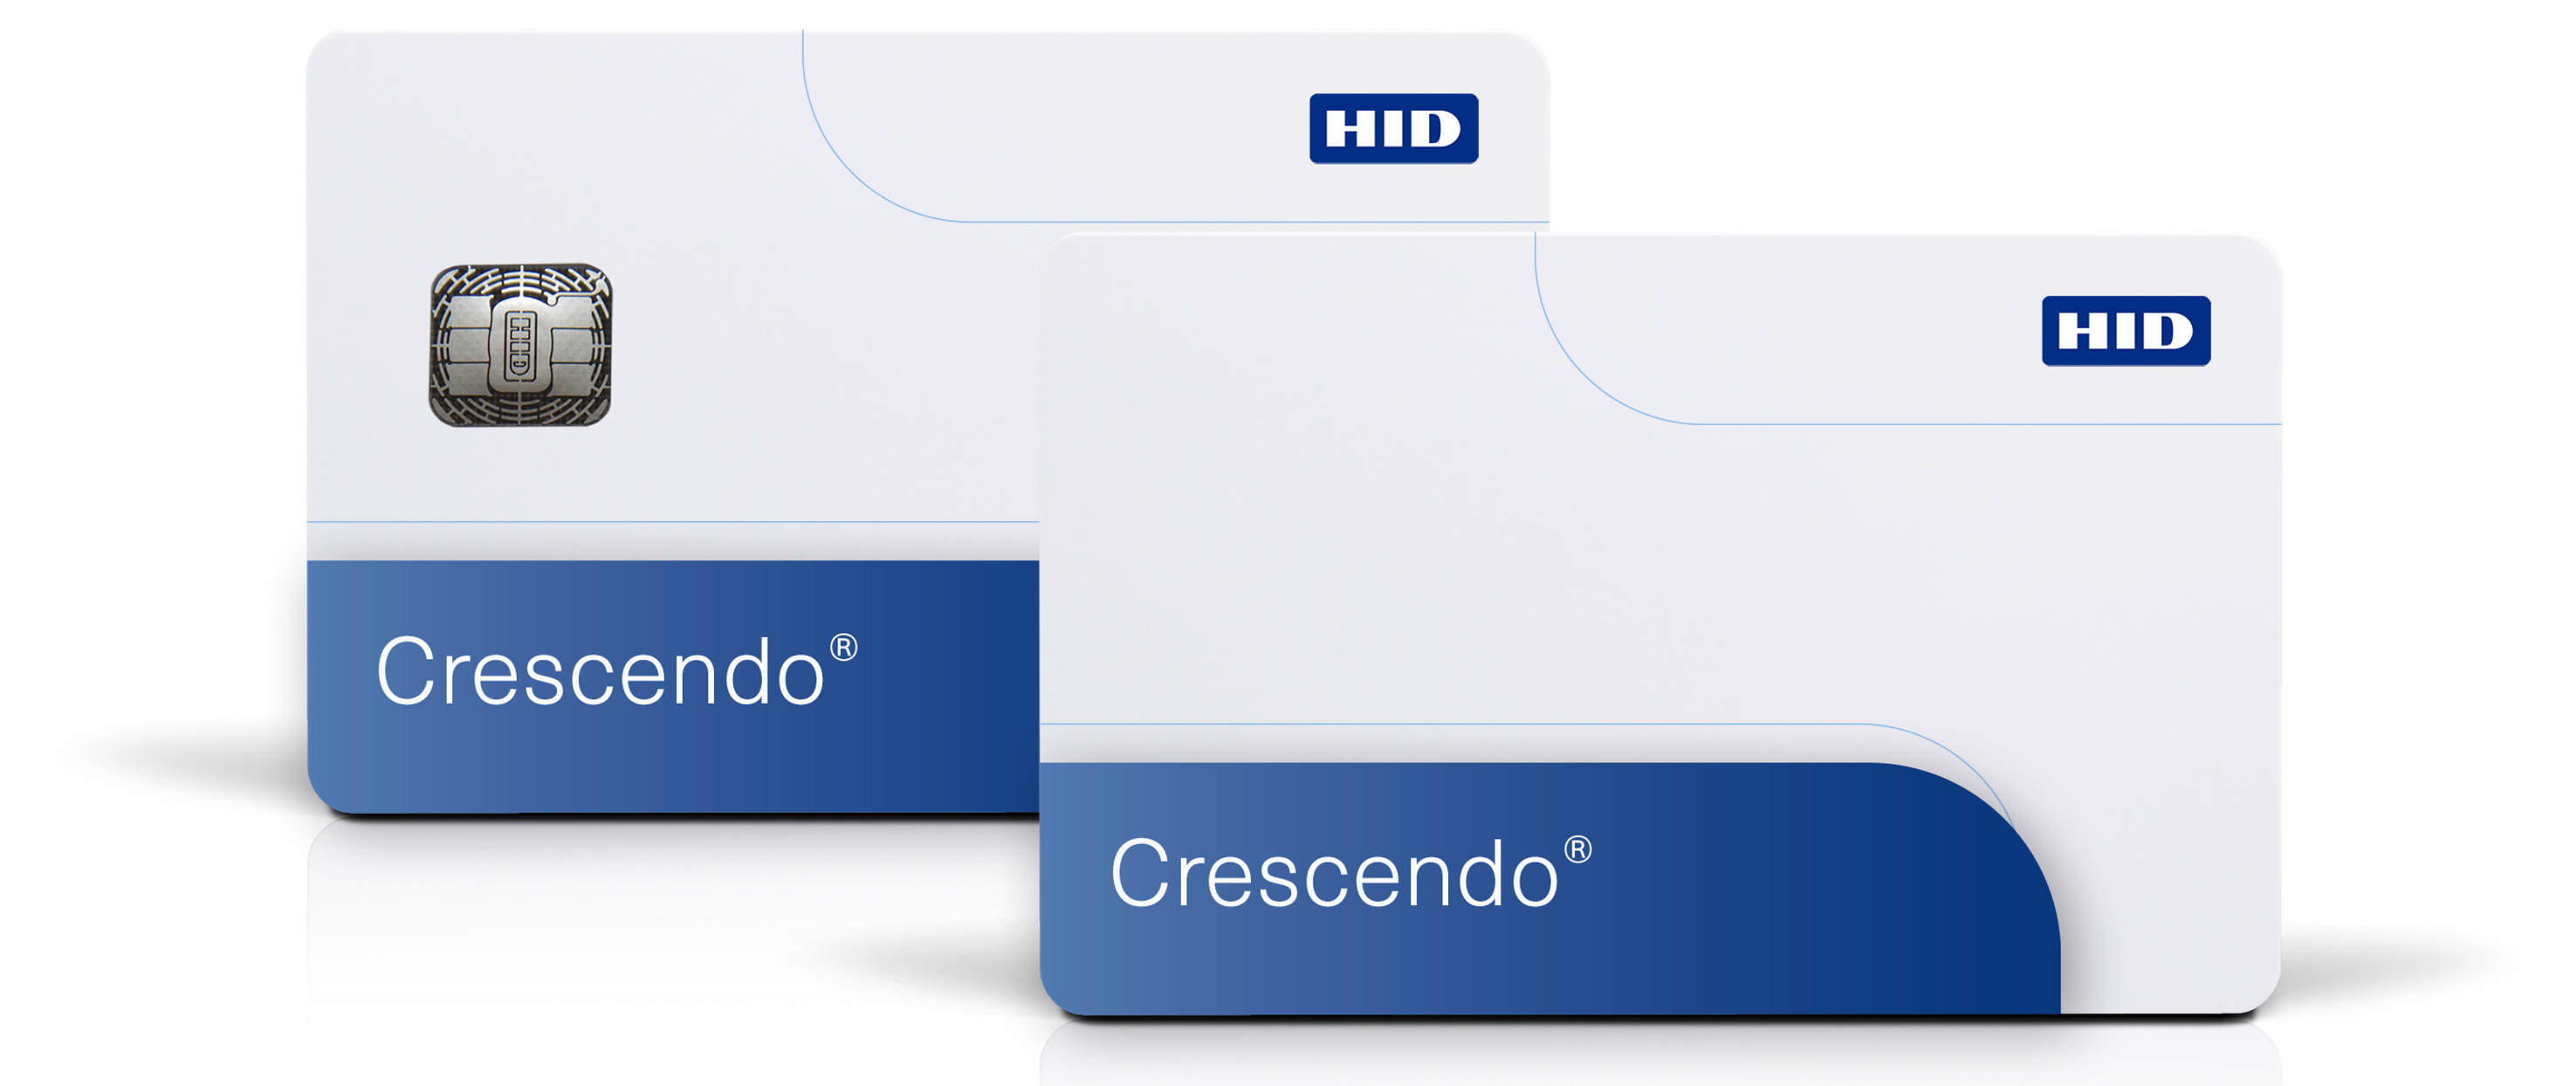 Crescendo cards HID